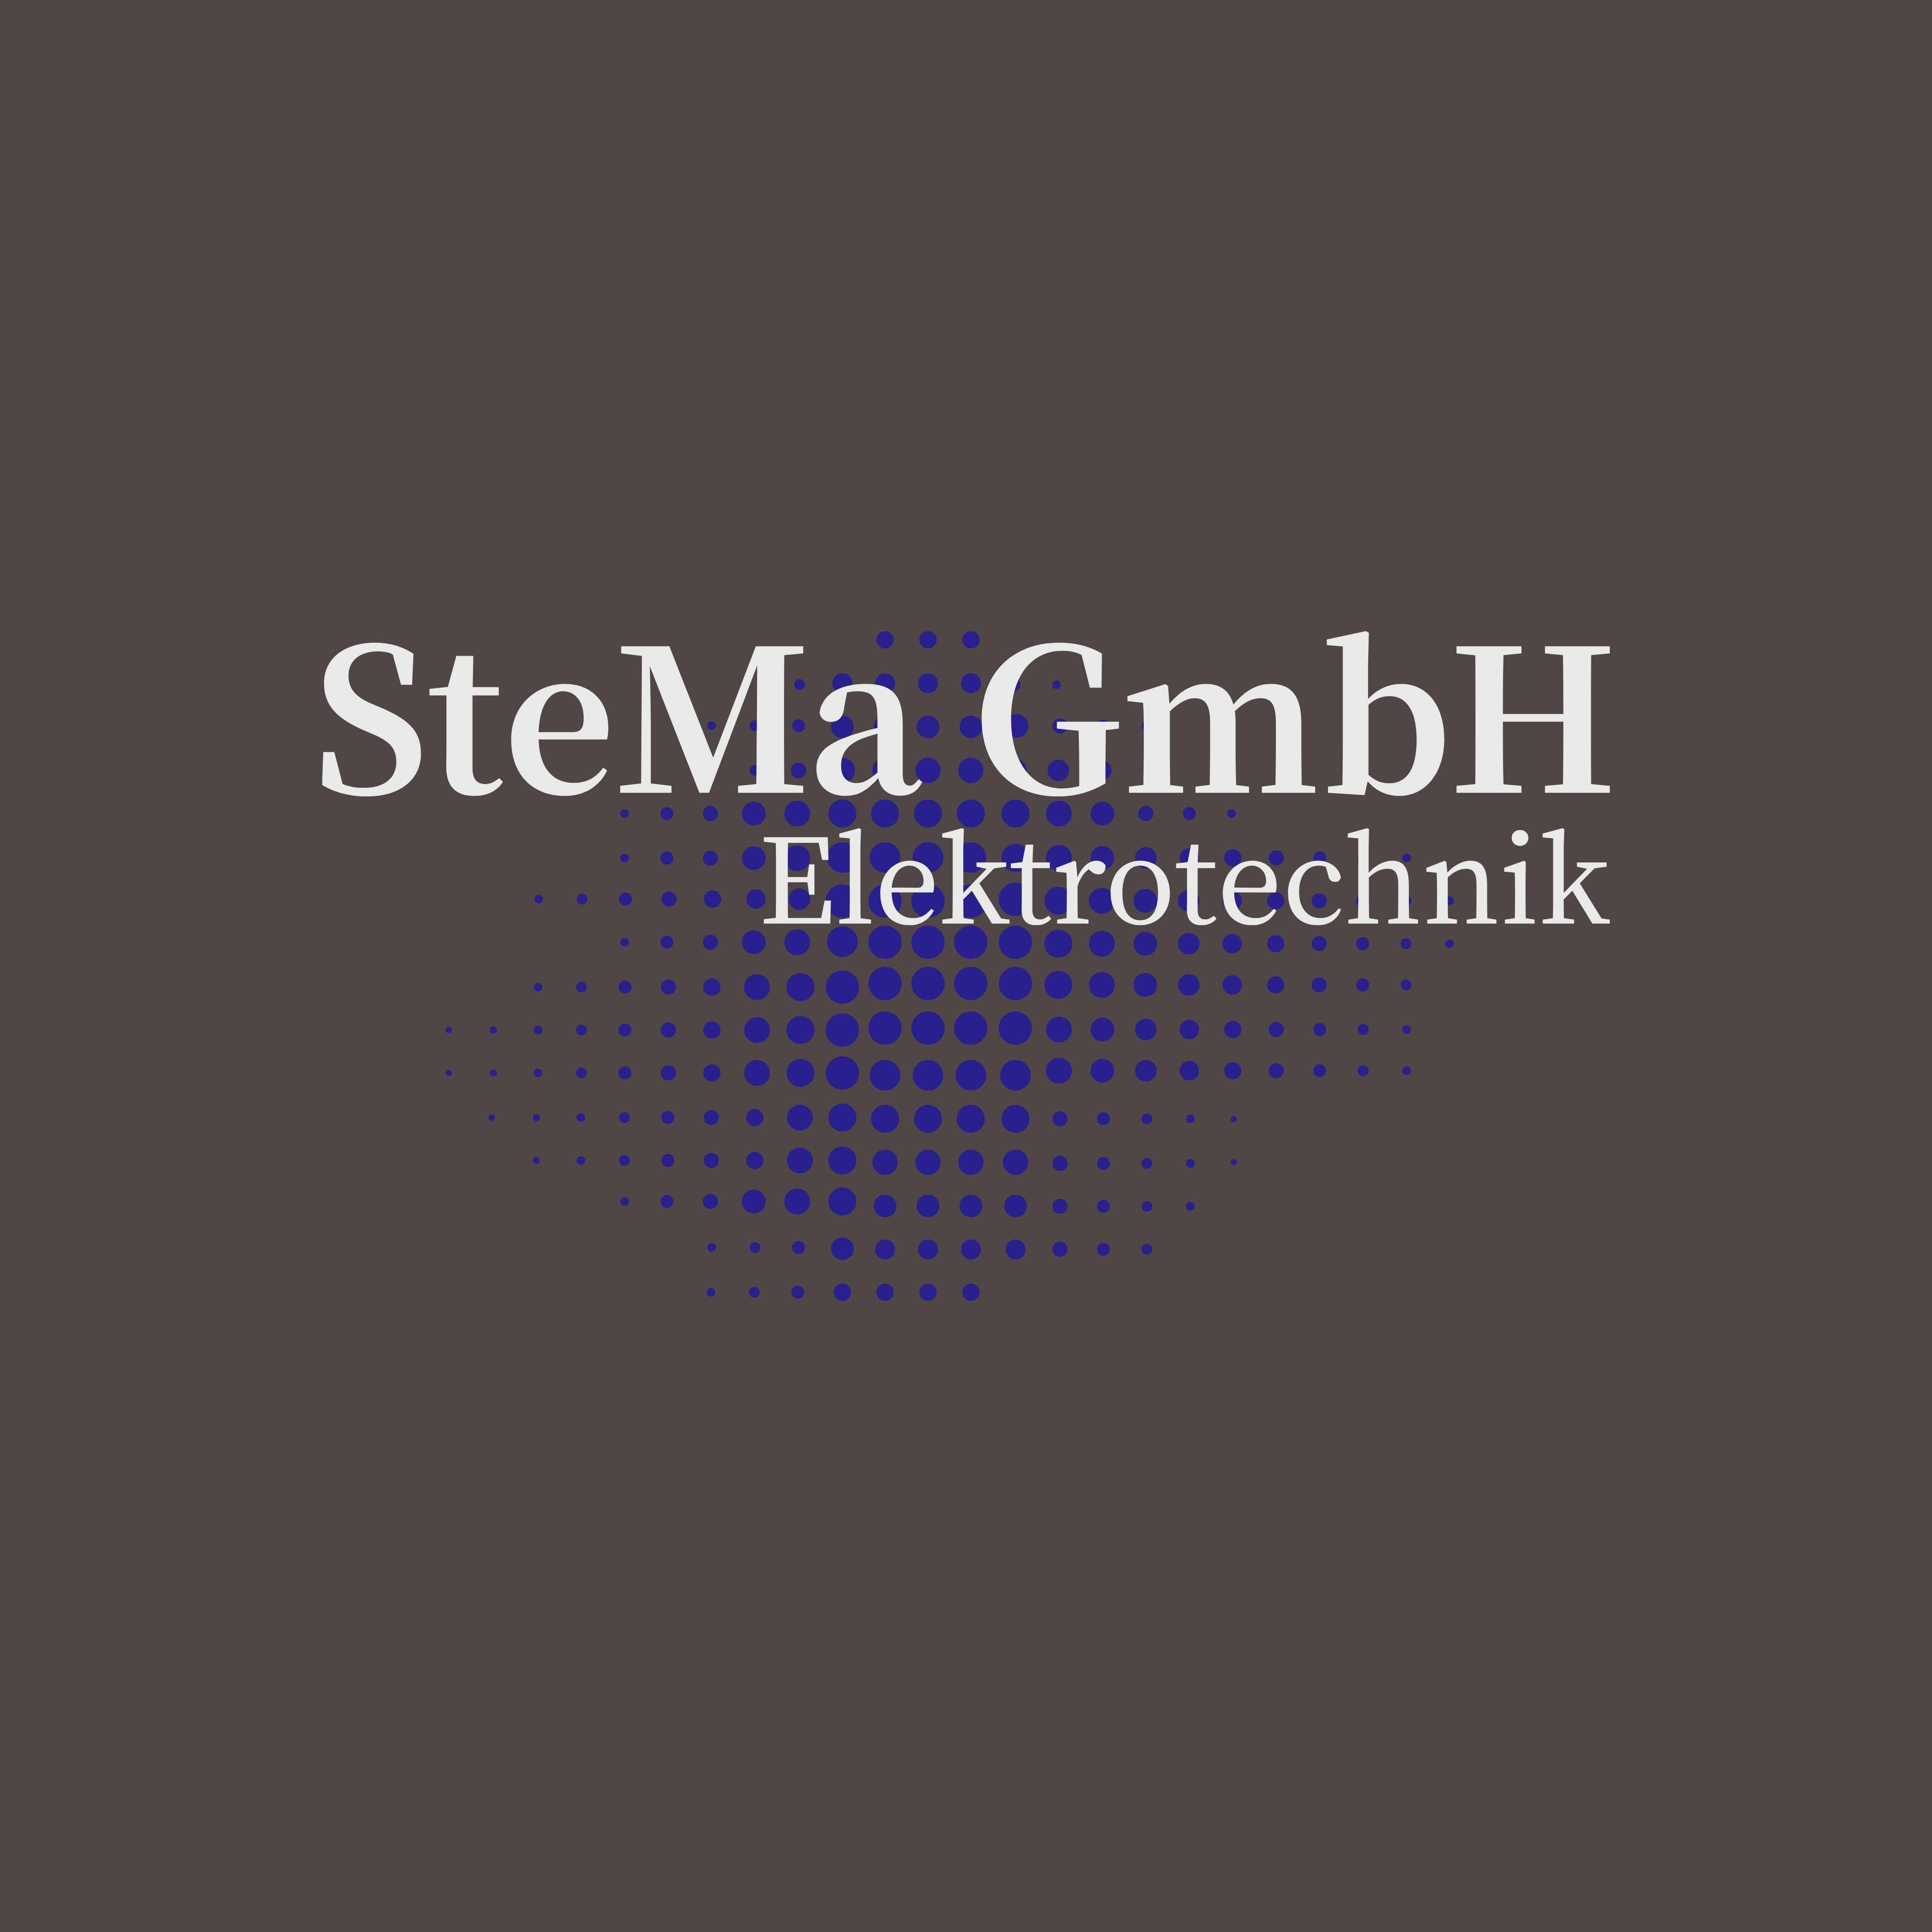 SteMa GmbH Elektrotechnik in Bremerhaven - Logo